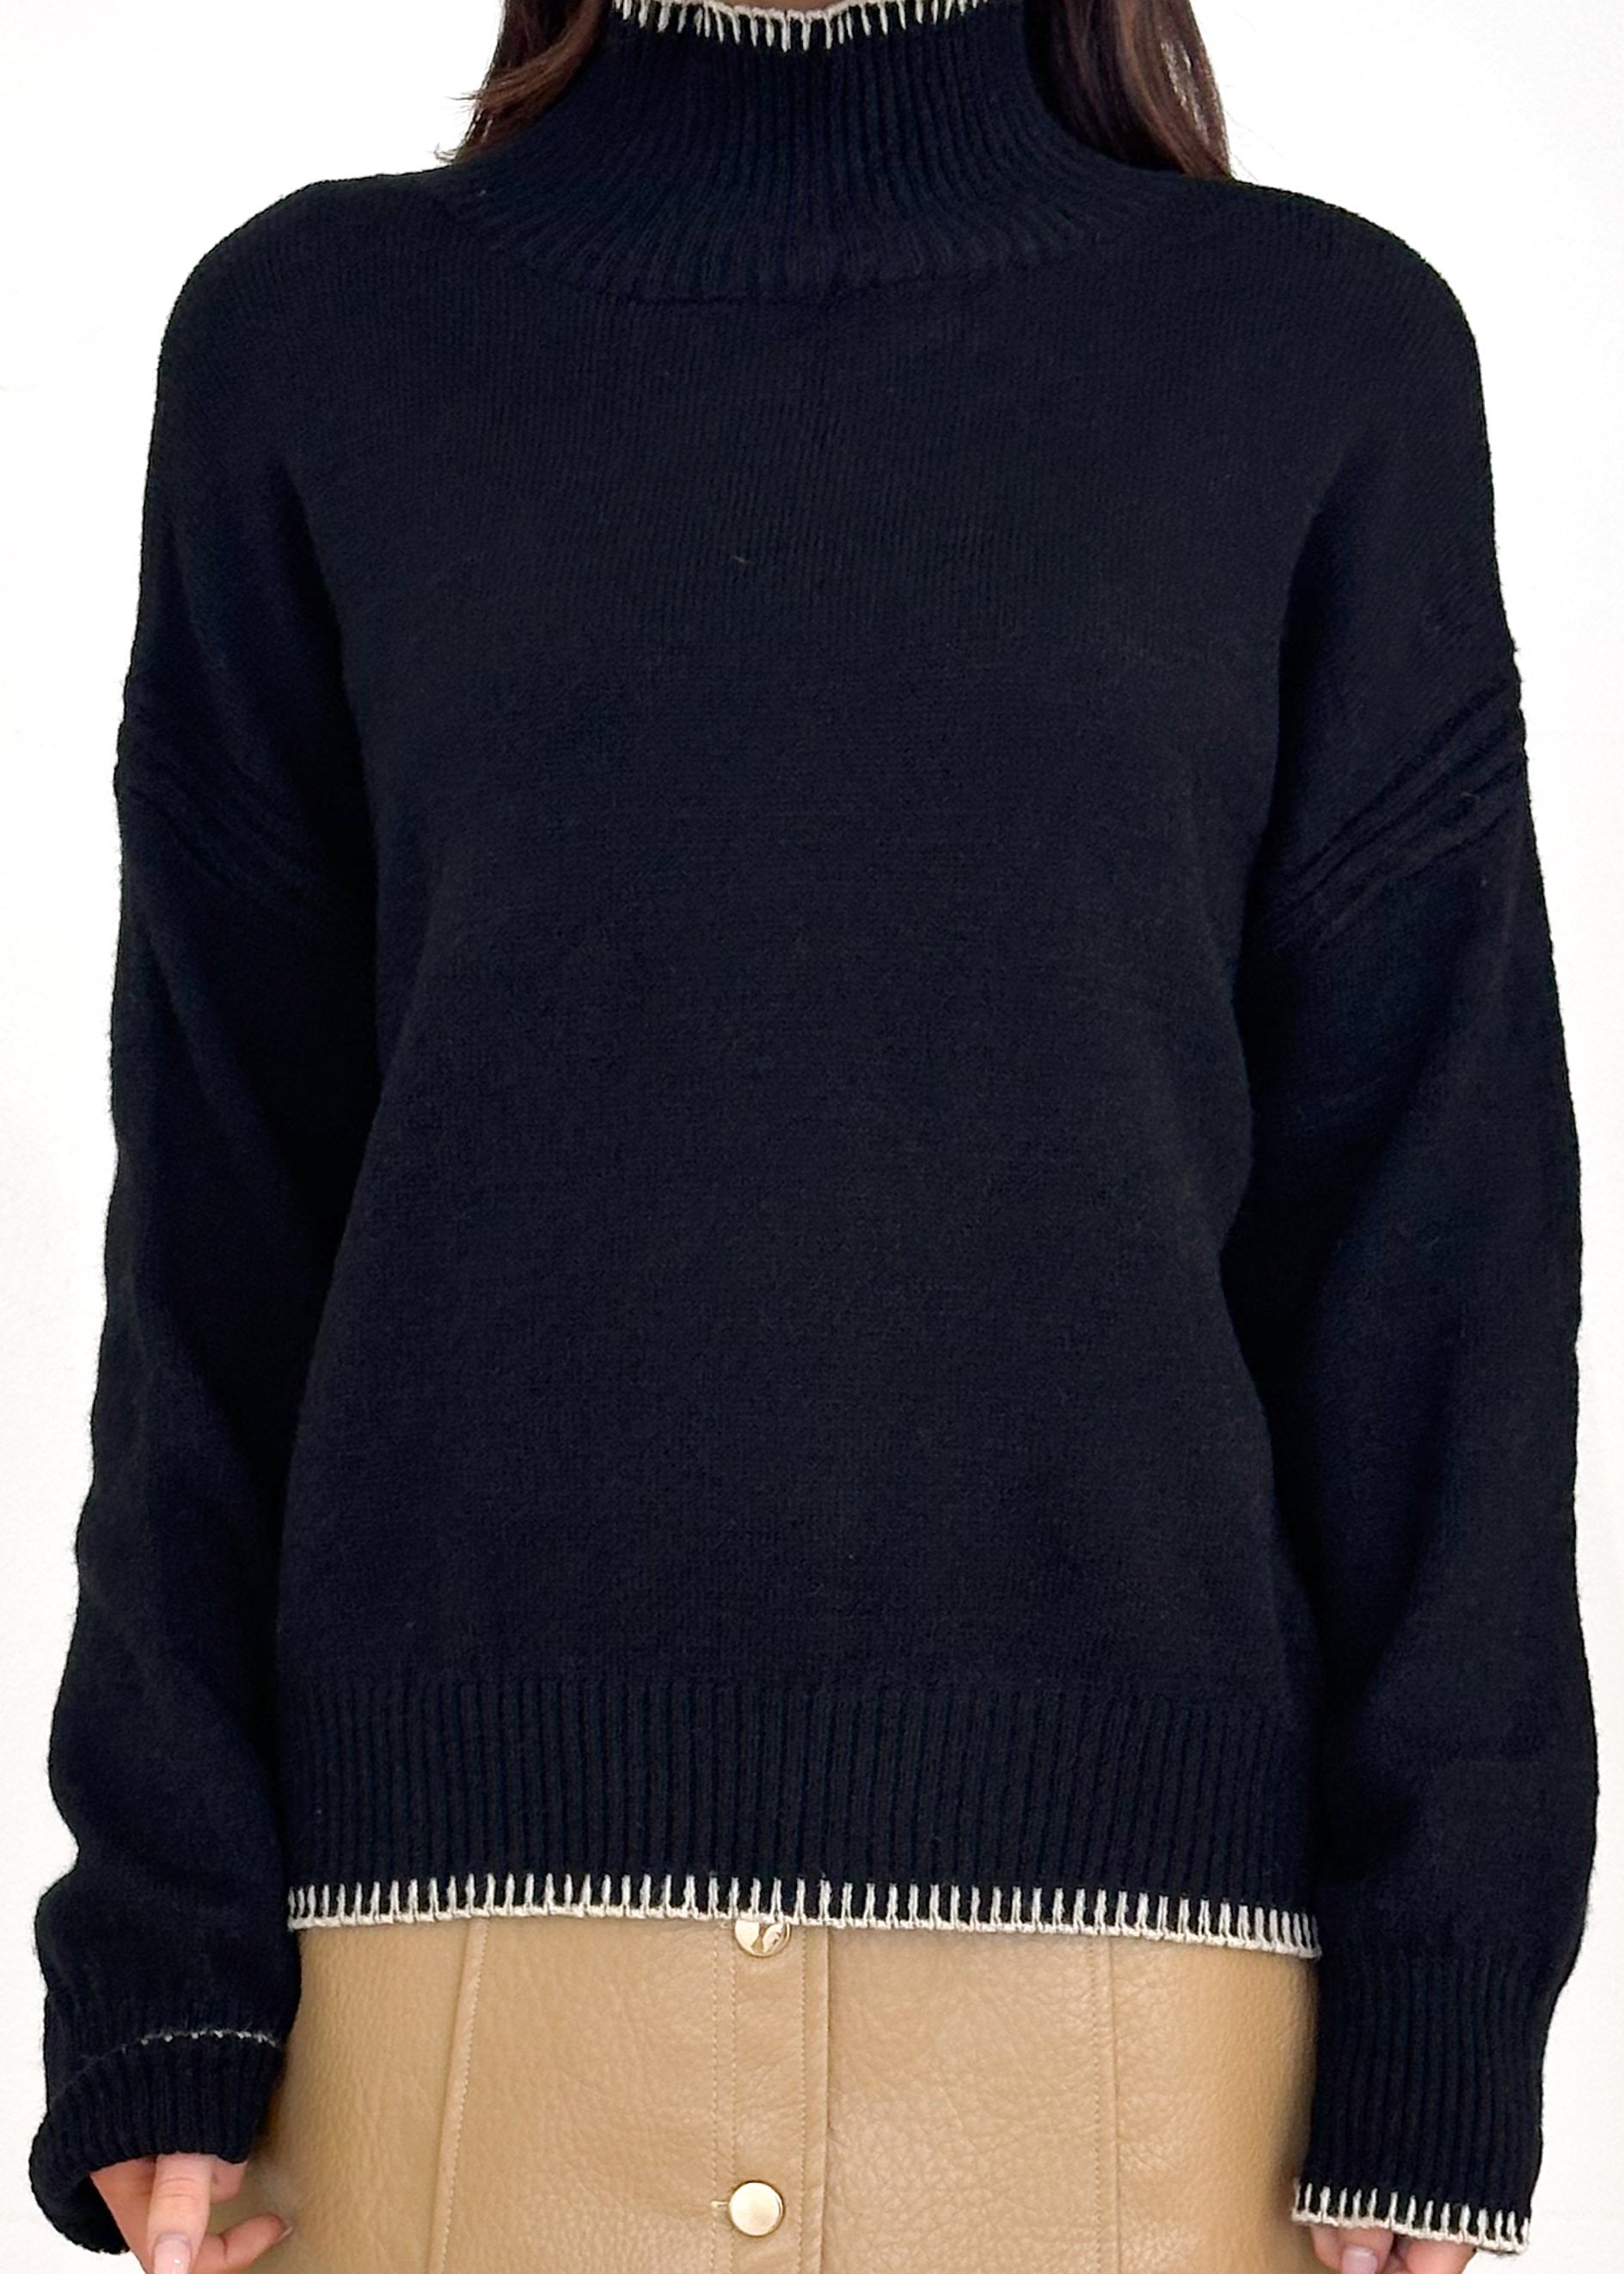 Annaroe Sweater - Black